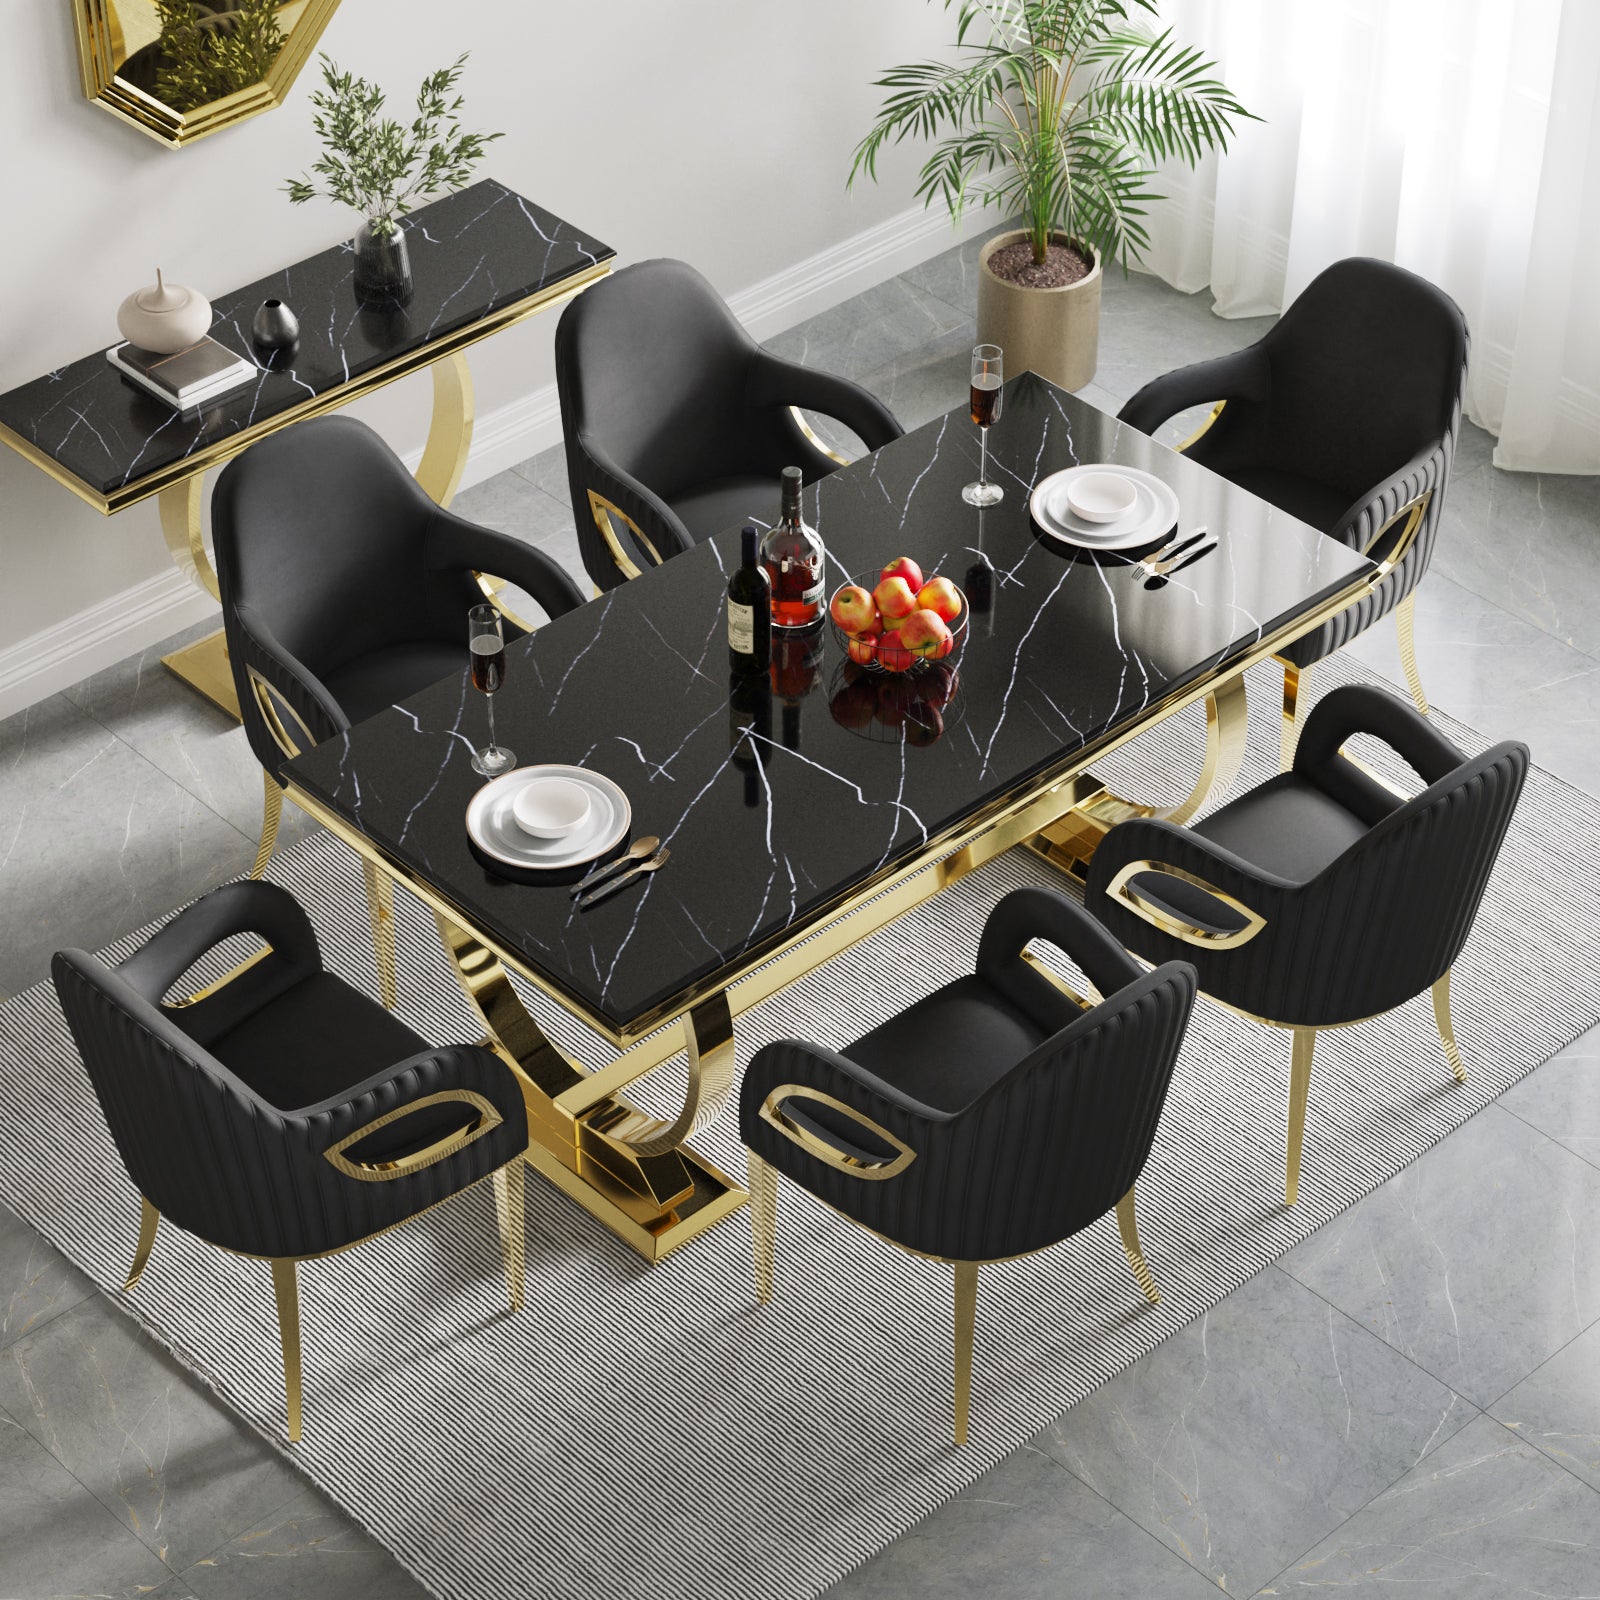 625-Set | AUZ Black and Gold Dining room Sets for 6